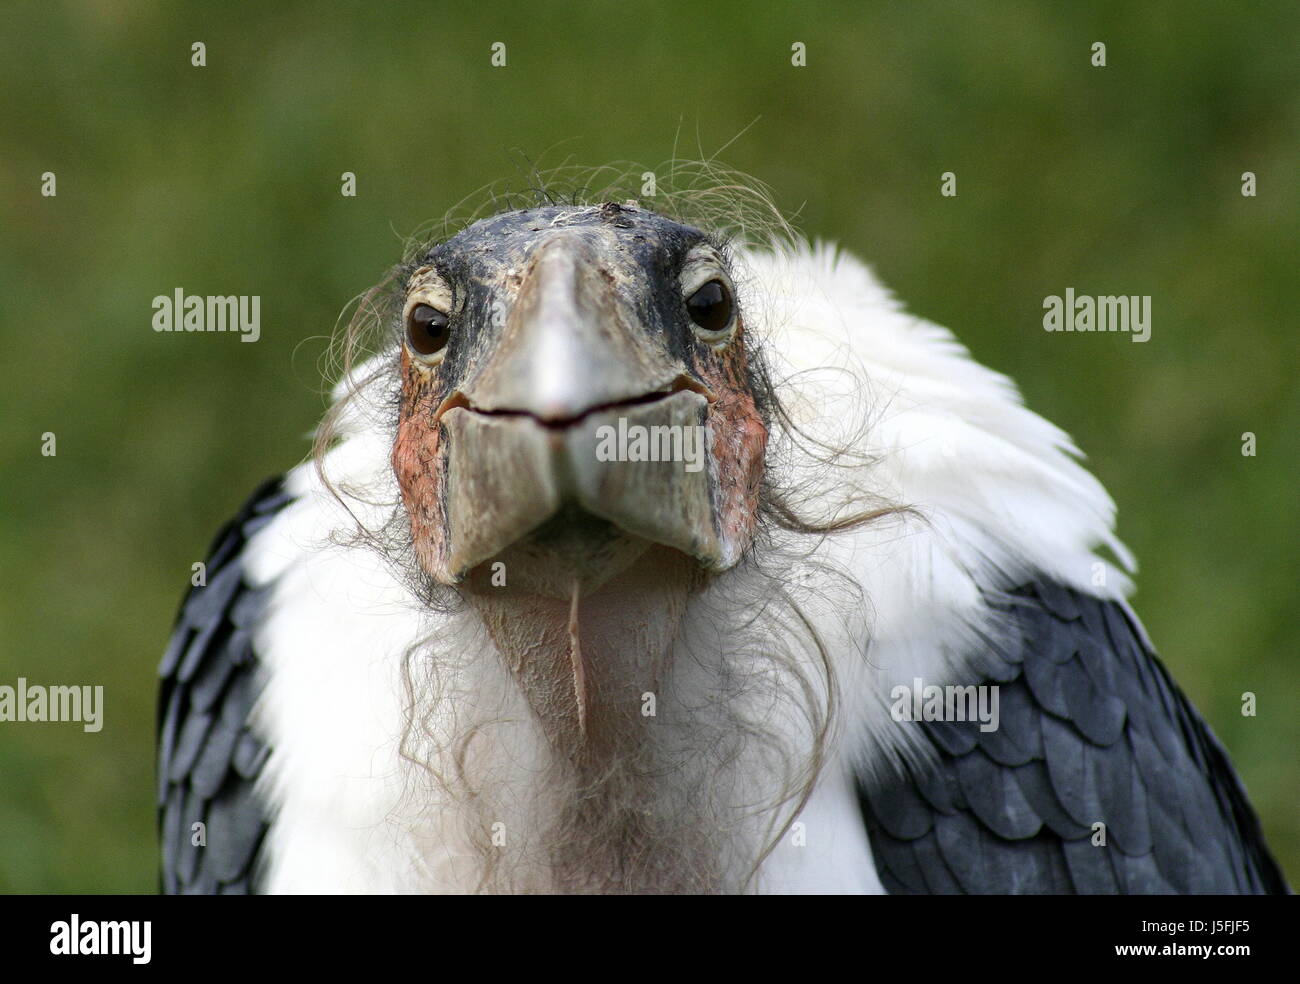 Uccelli uccelli peli piume becco vulture scavenger stork rostri carrion marabou Foto Stock